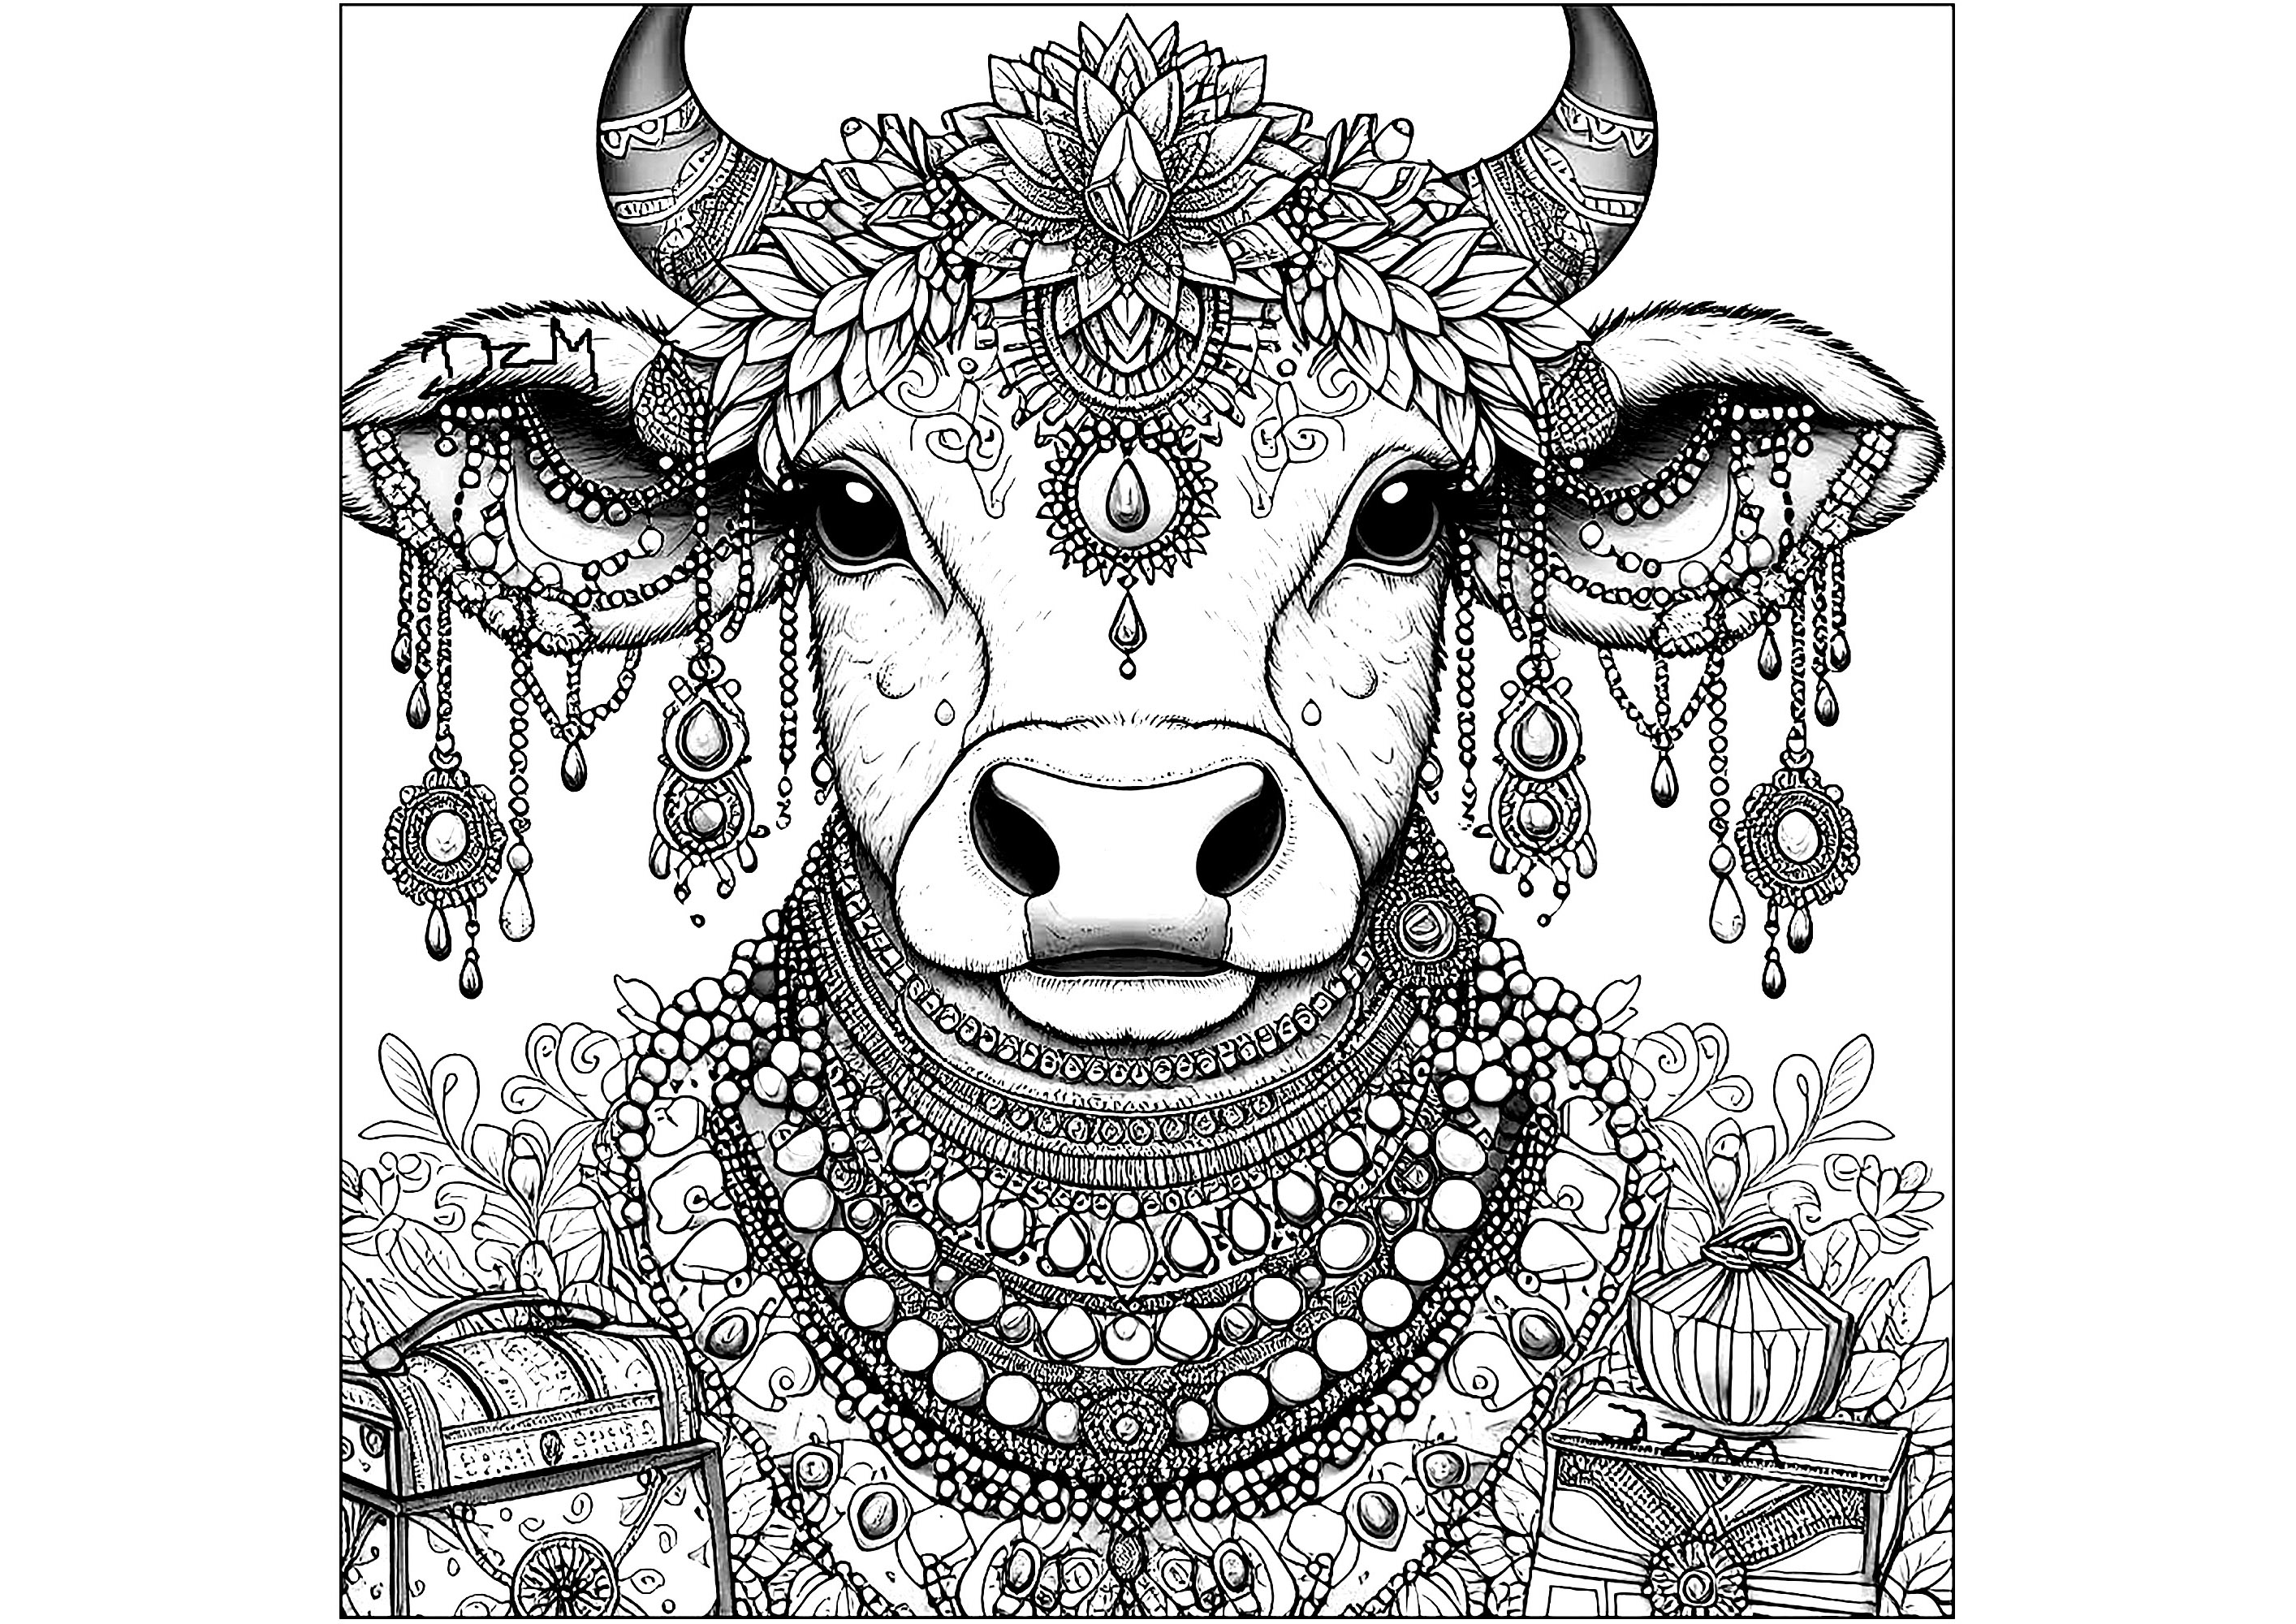 Vaca com jóias bonitas, Artista : Domandalas